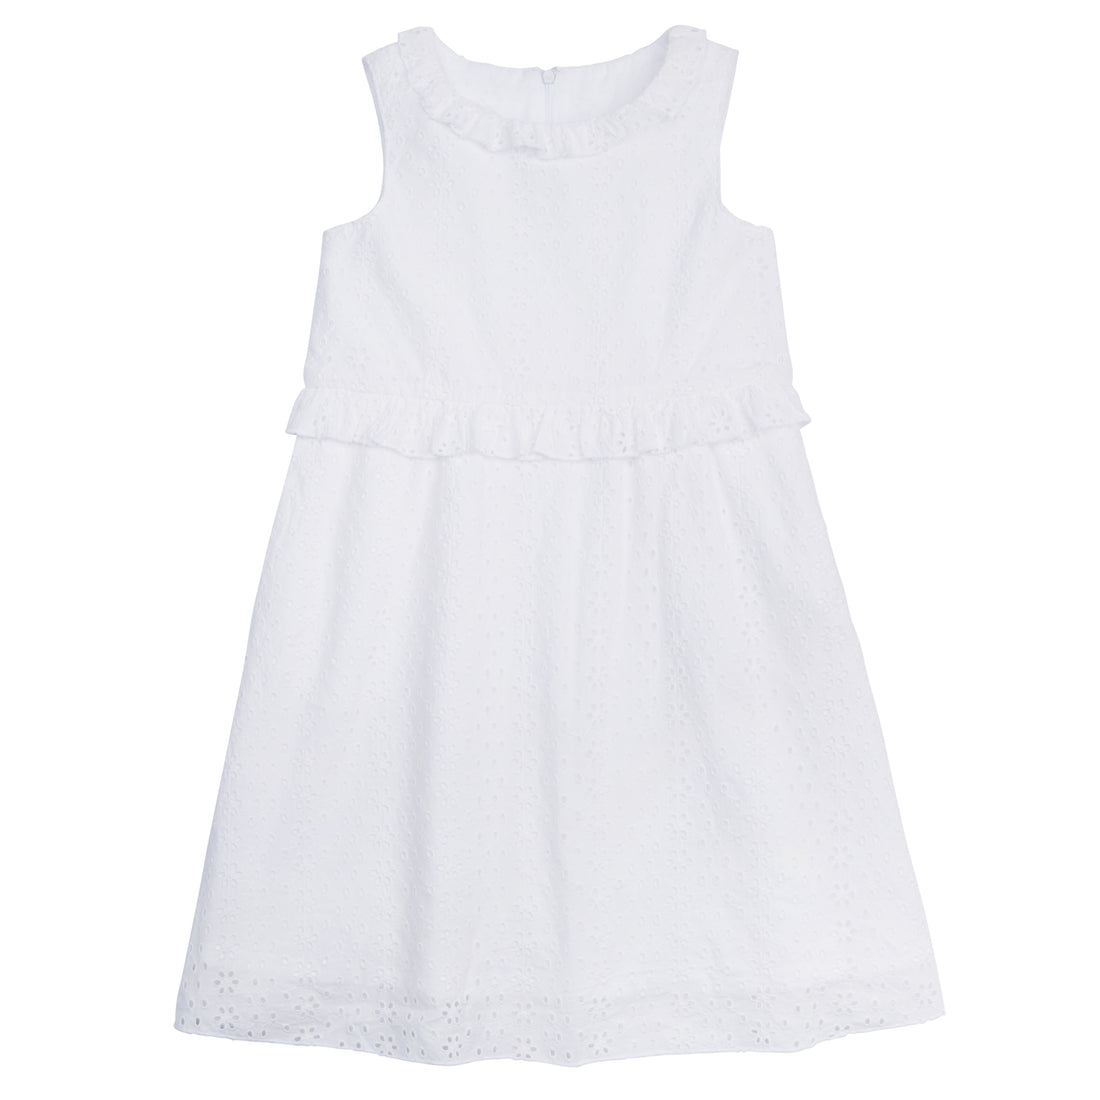 classic childrens clothing girls white eyelet dress with ruffle trim around waist and neckline